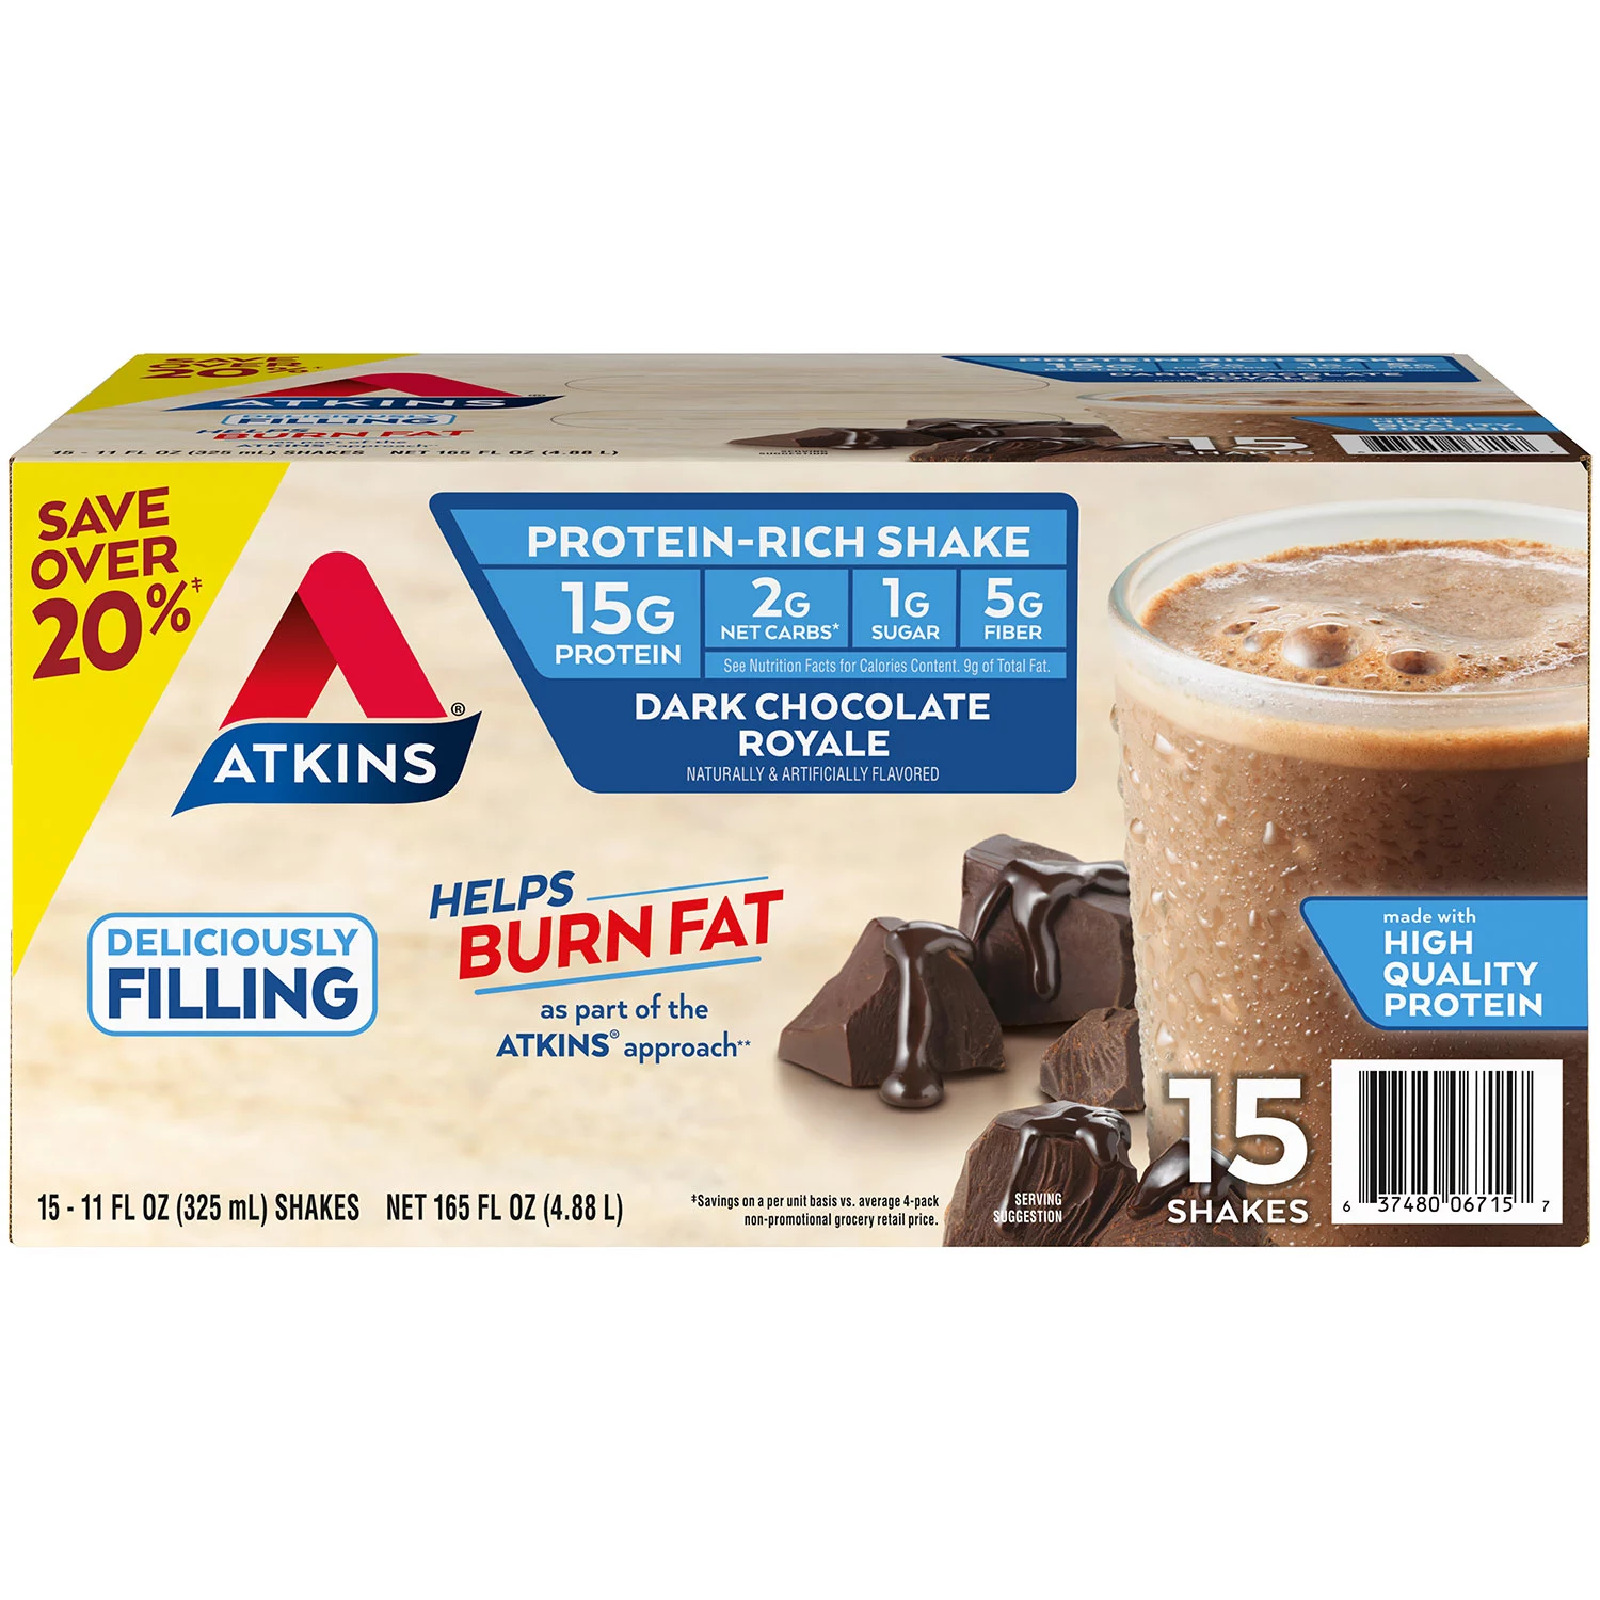 Atkins Gluten Free Protein-Rich Shake, Dark Chocolate Royale, Keto-Friendly (15